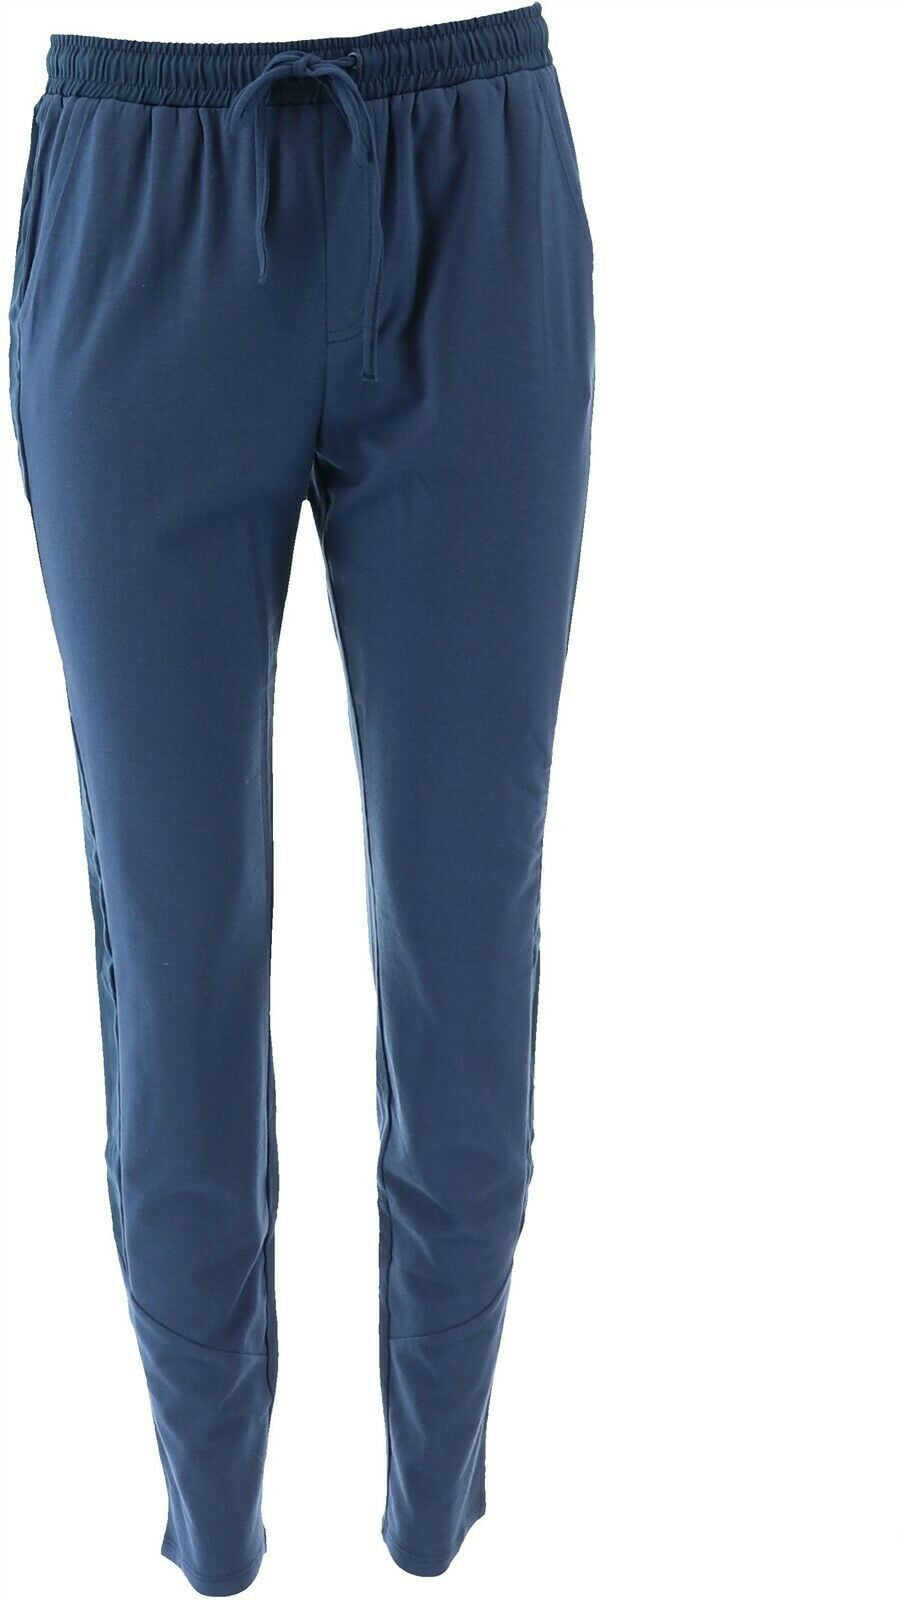 AnyBody Cozy Knit Pants Satin Trim Deep Sea L NEW A367658 | Walmart Canada